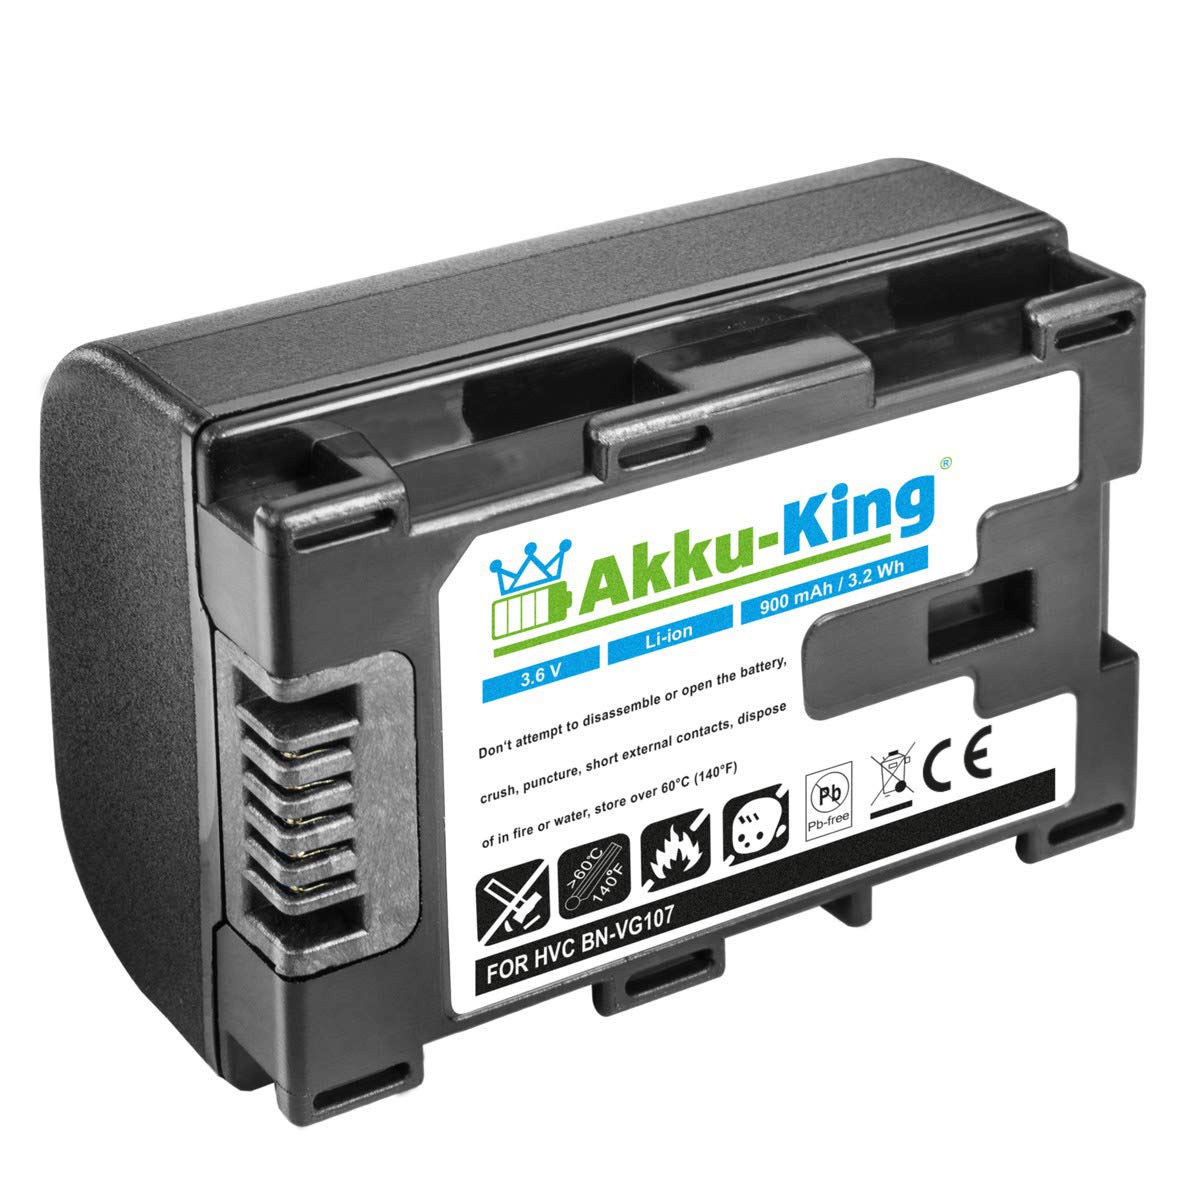 Akku-King Akku kompatibel mit JVC BN-VG107 für JVC Everio GZ-Reihe - Li-Ion 900mAh - ersetzt auch JVC BN-VG114, BN-VG121, BN-VG138